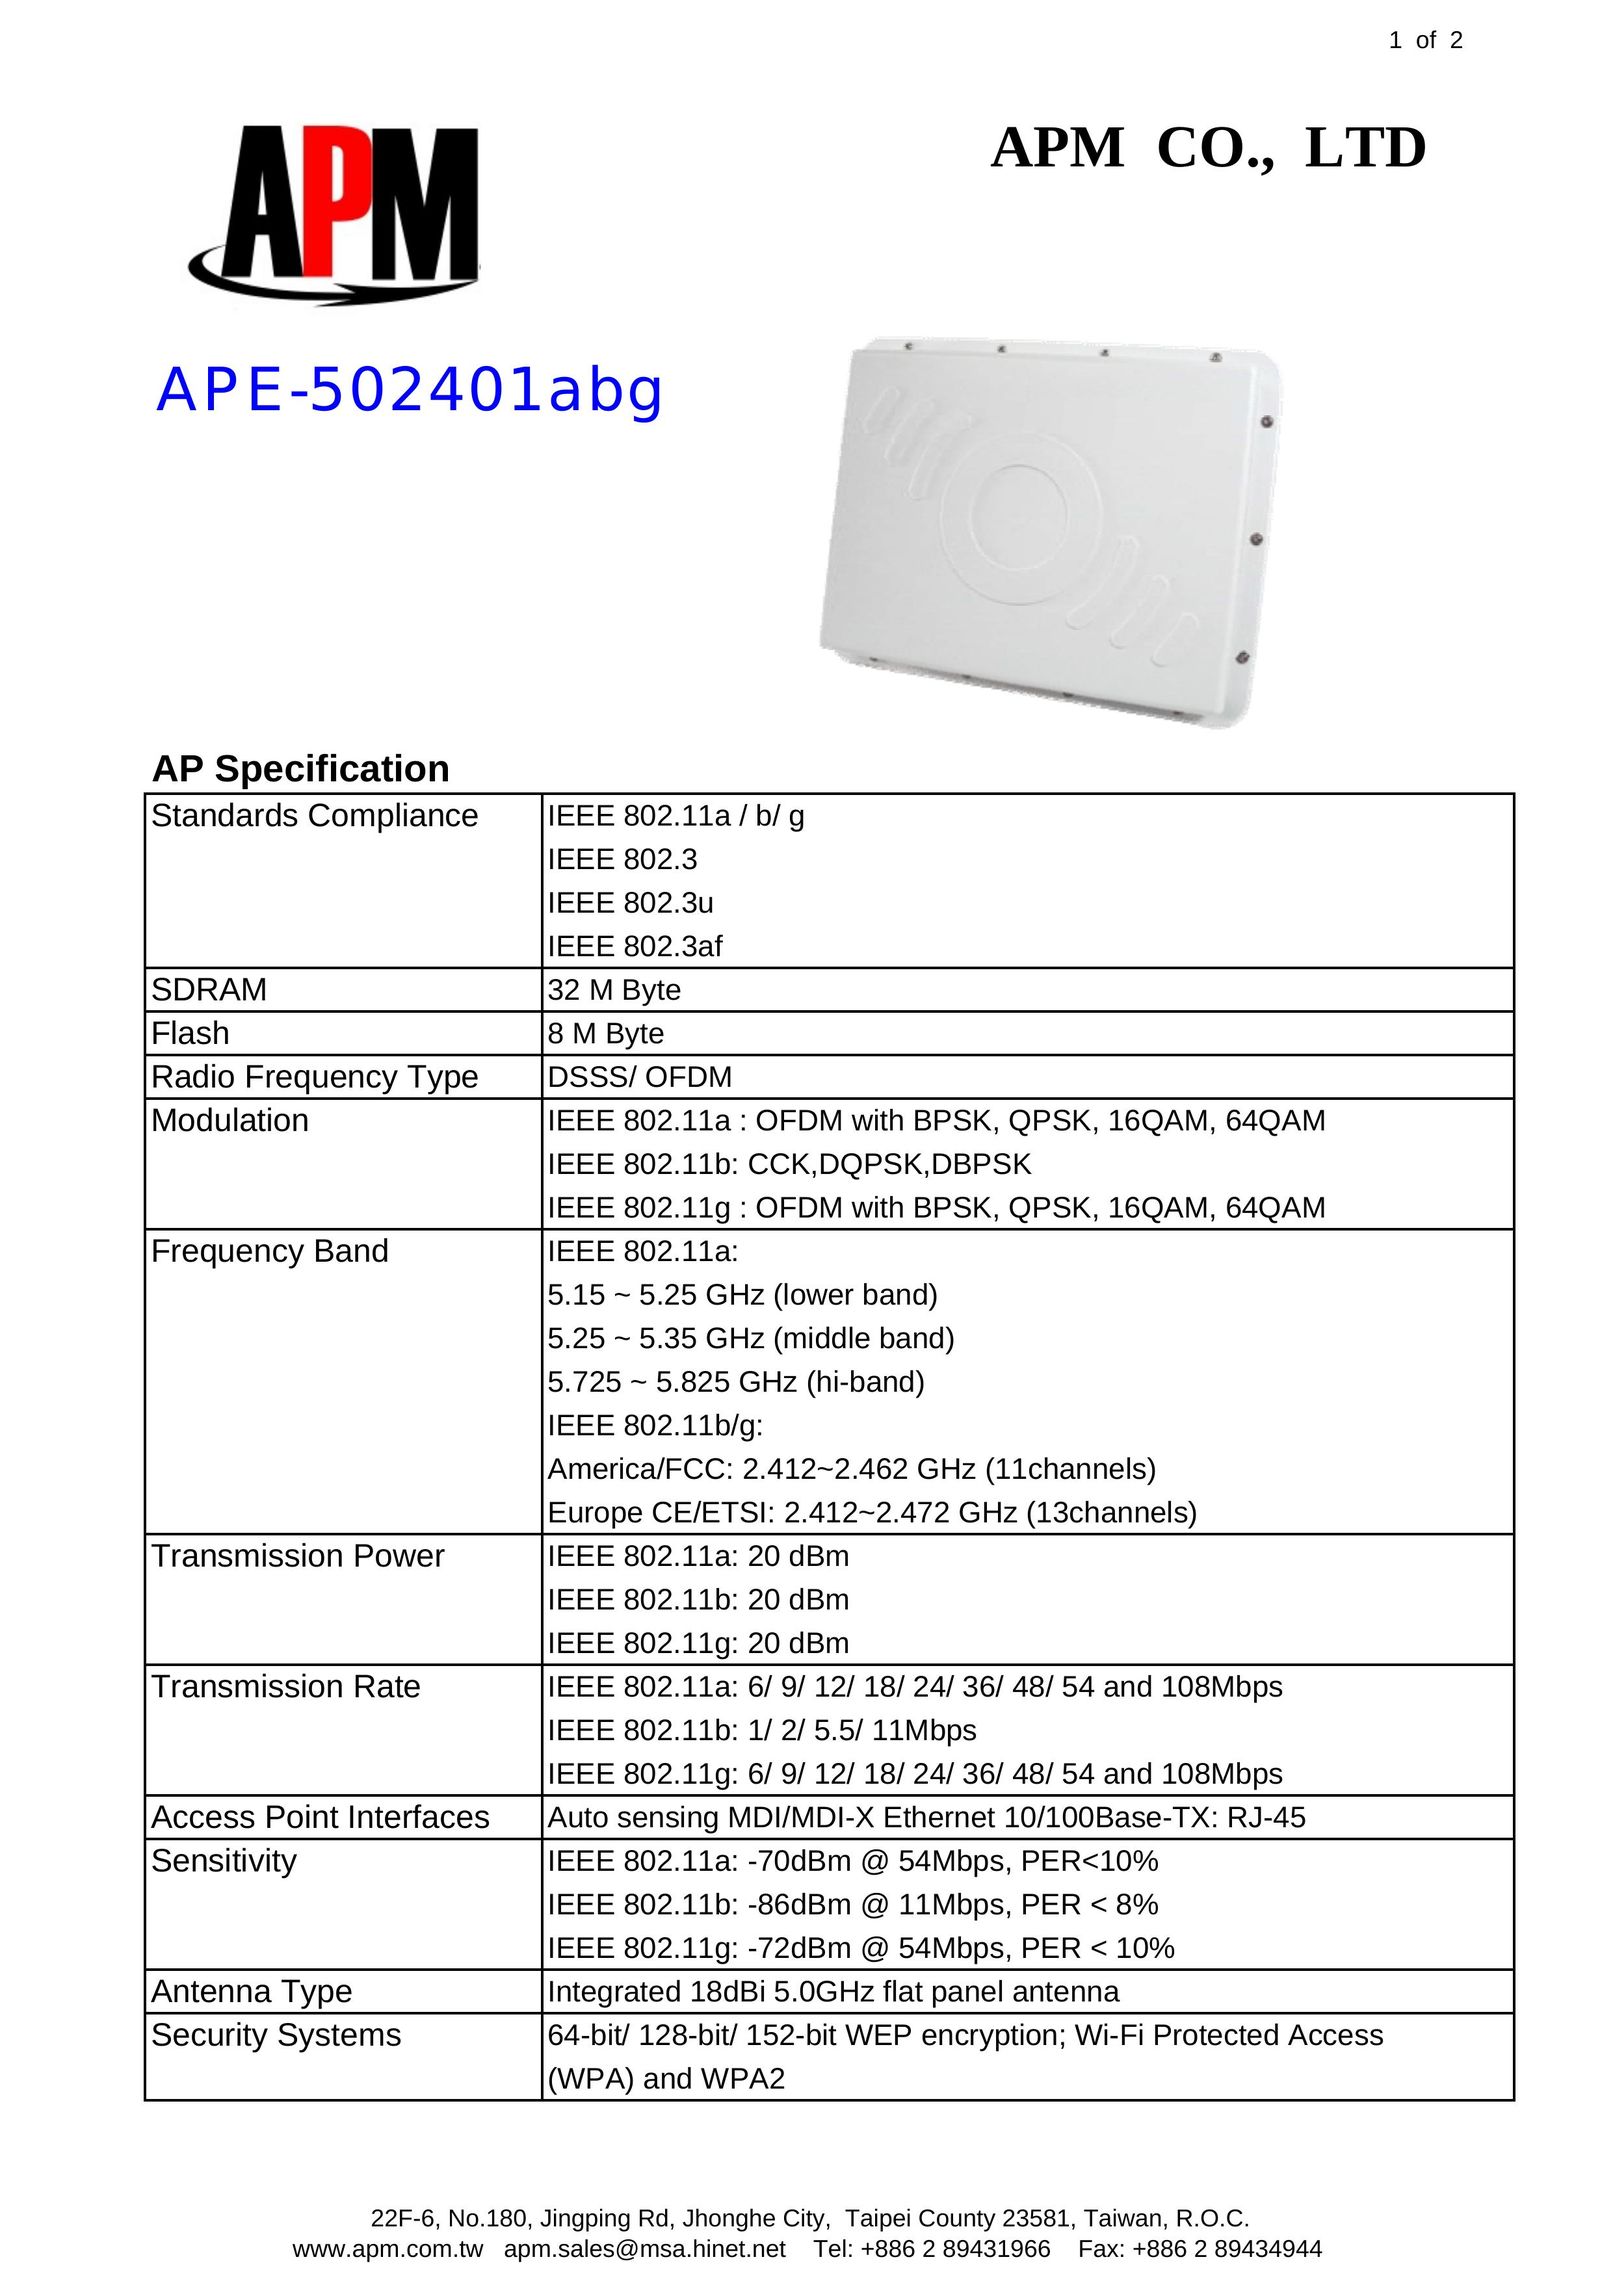 APM APE-502401abg Network Router User Manual